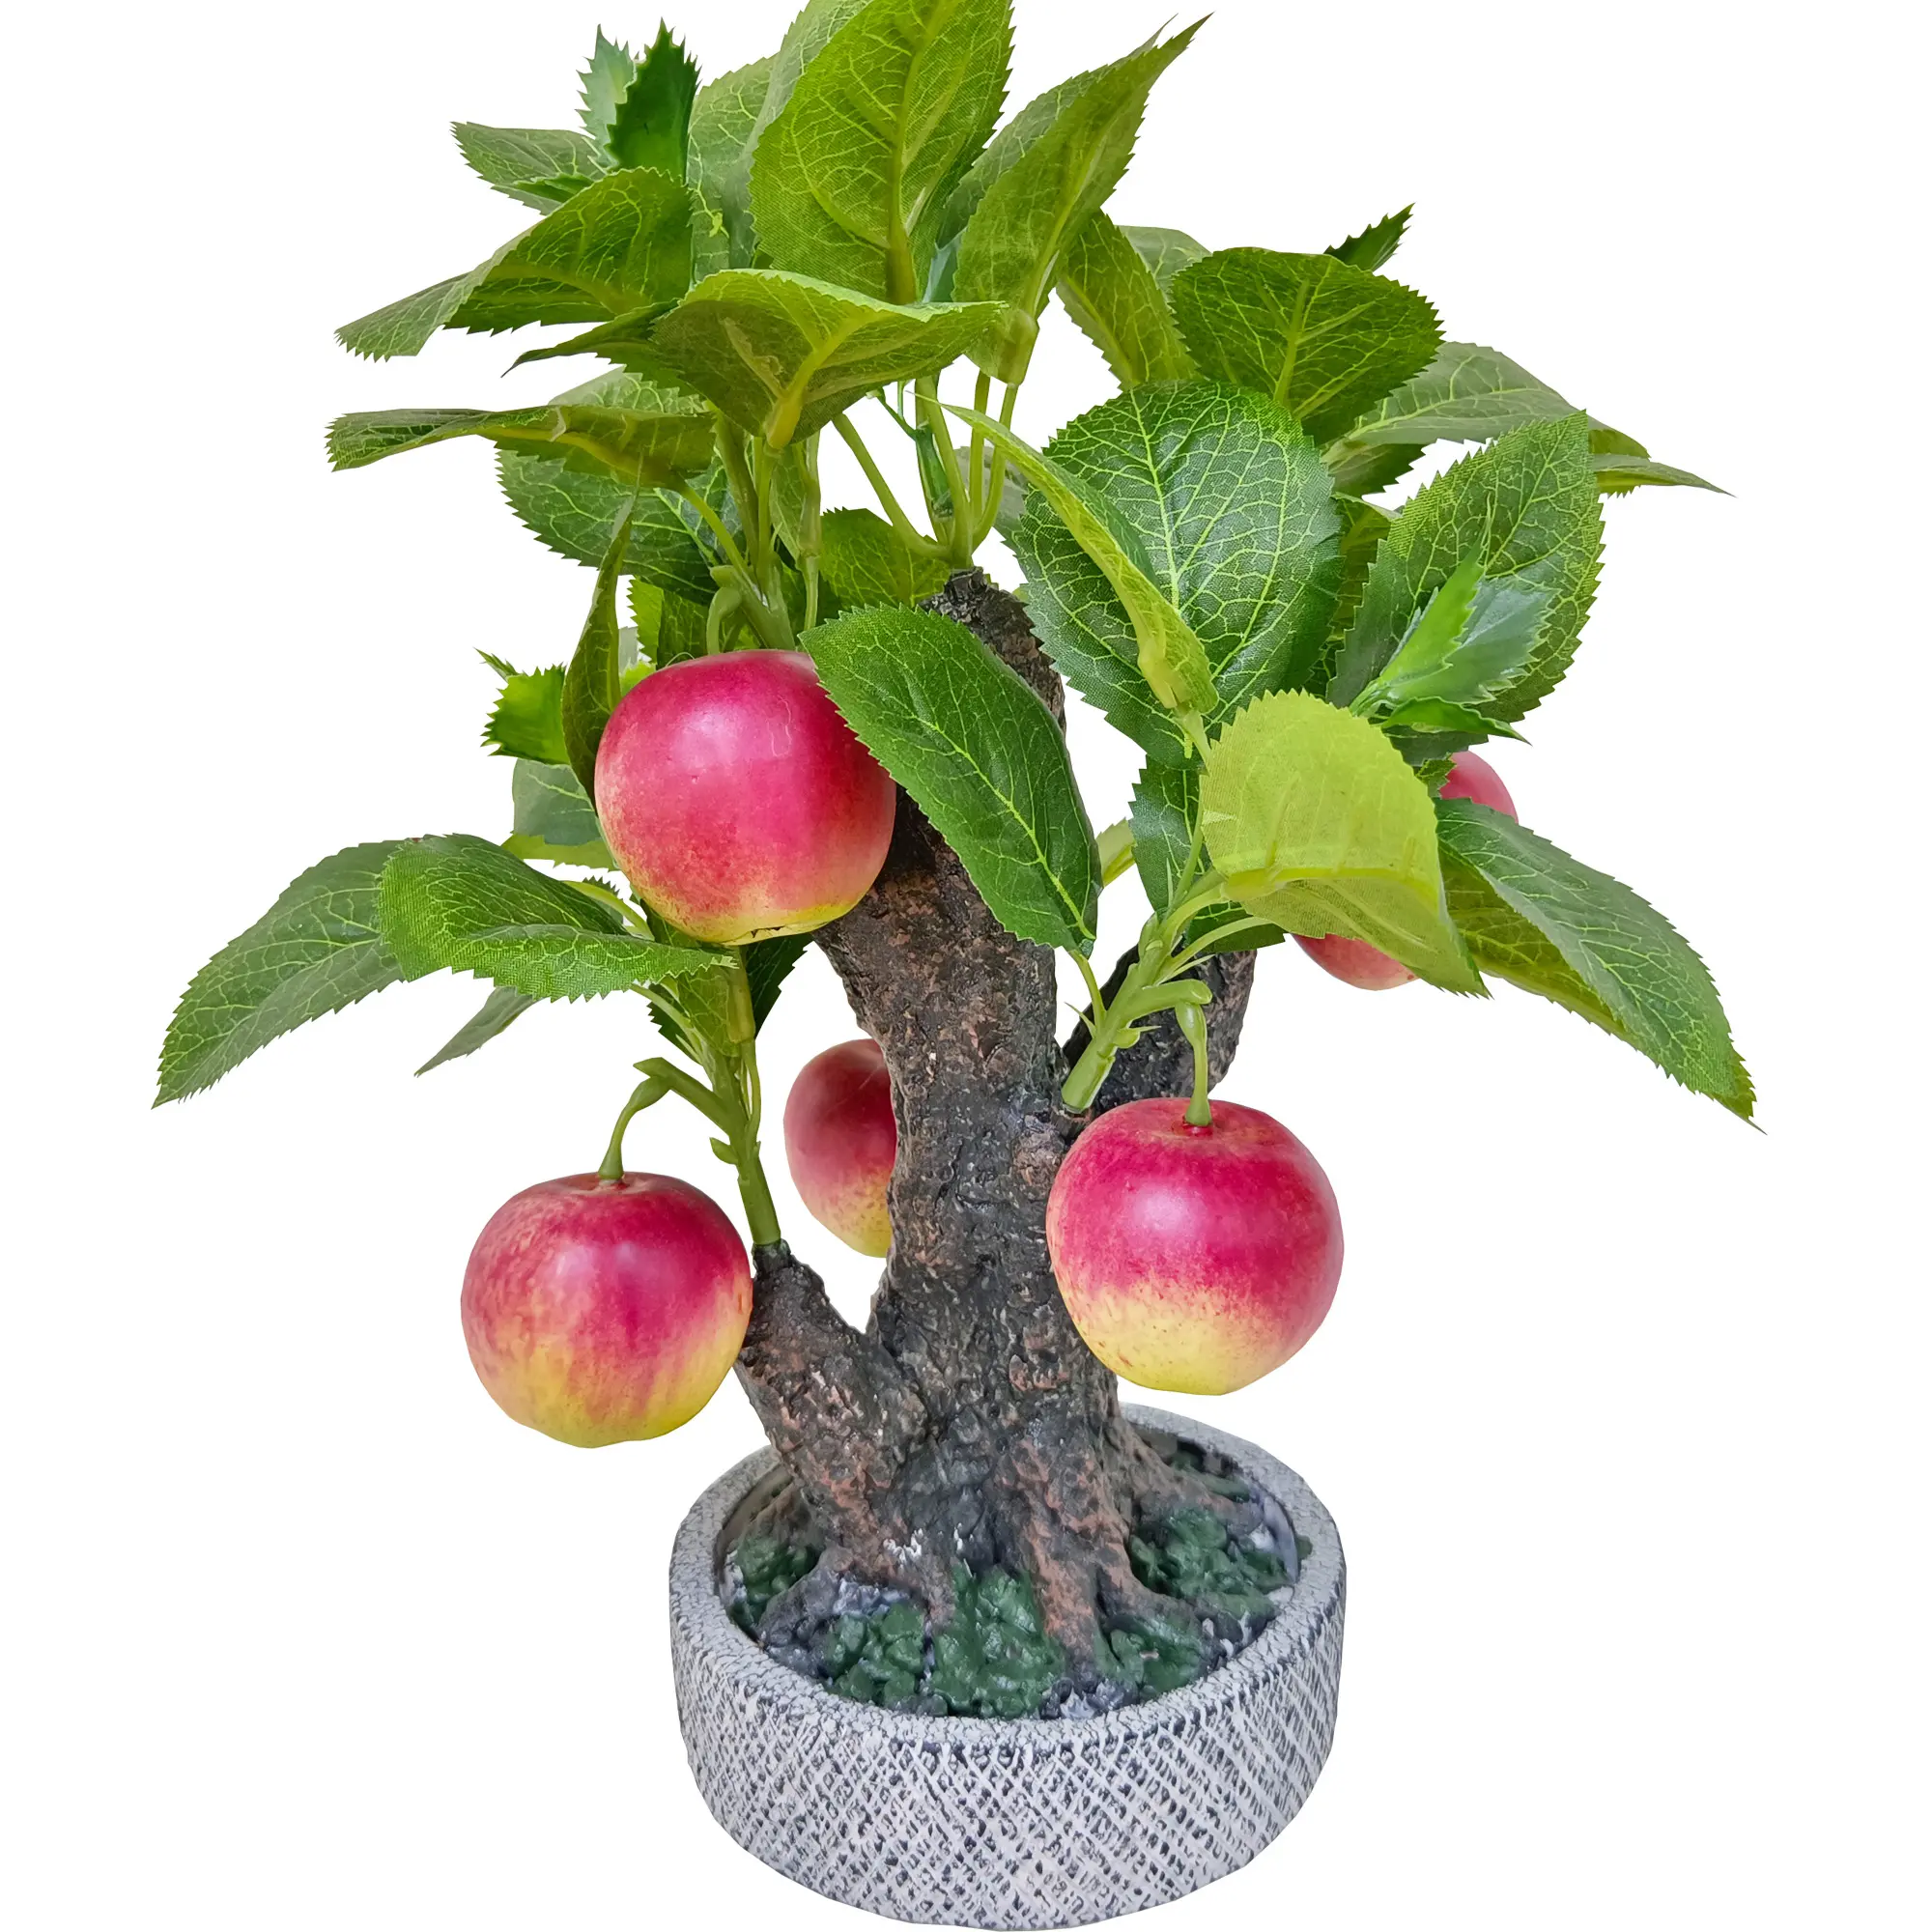 New 2022 Idea Home Decor Plastic Artificial fresh apples Simulation apple bonsai tablet Decoration